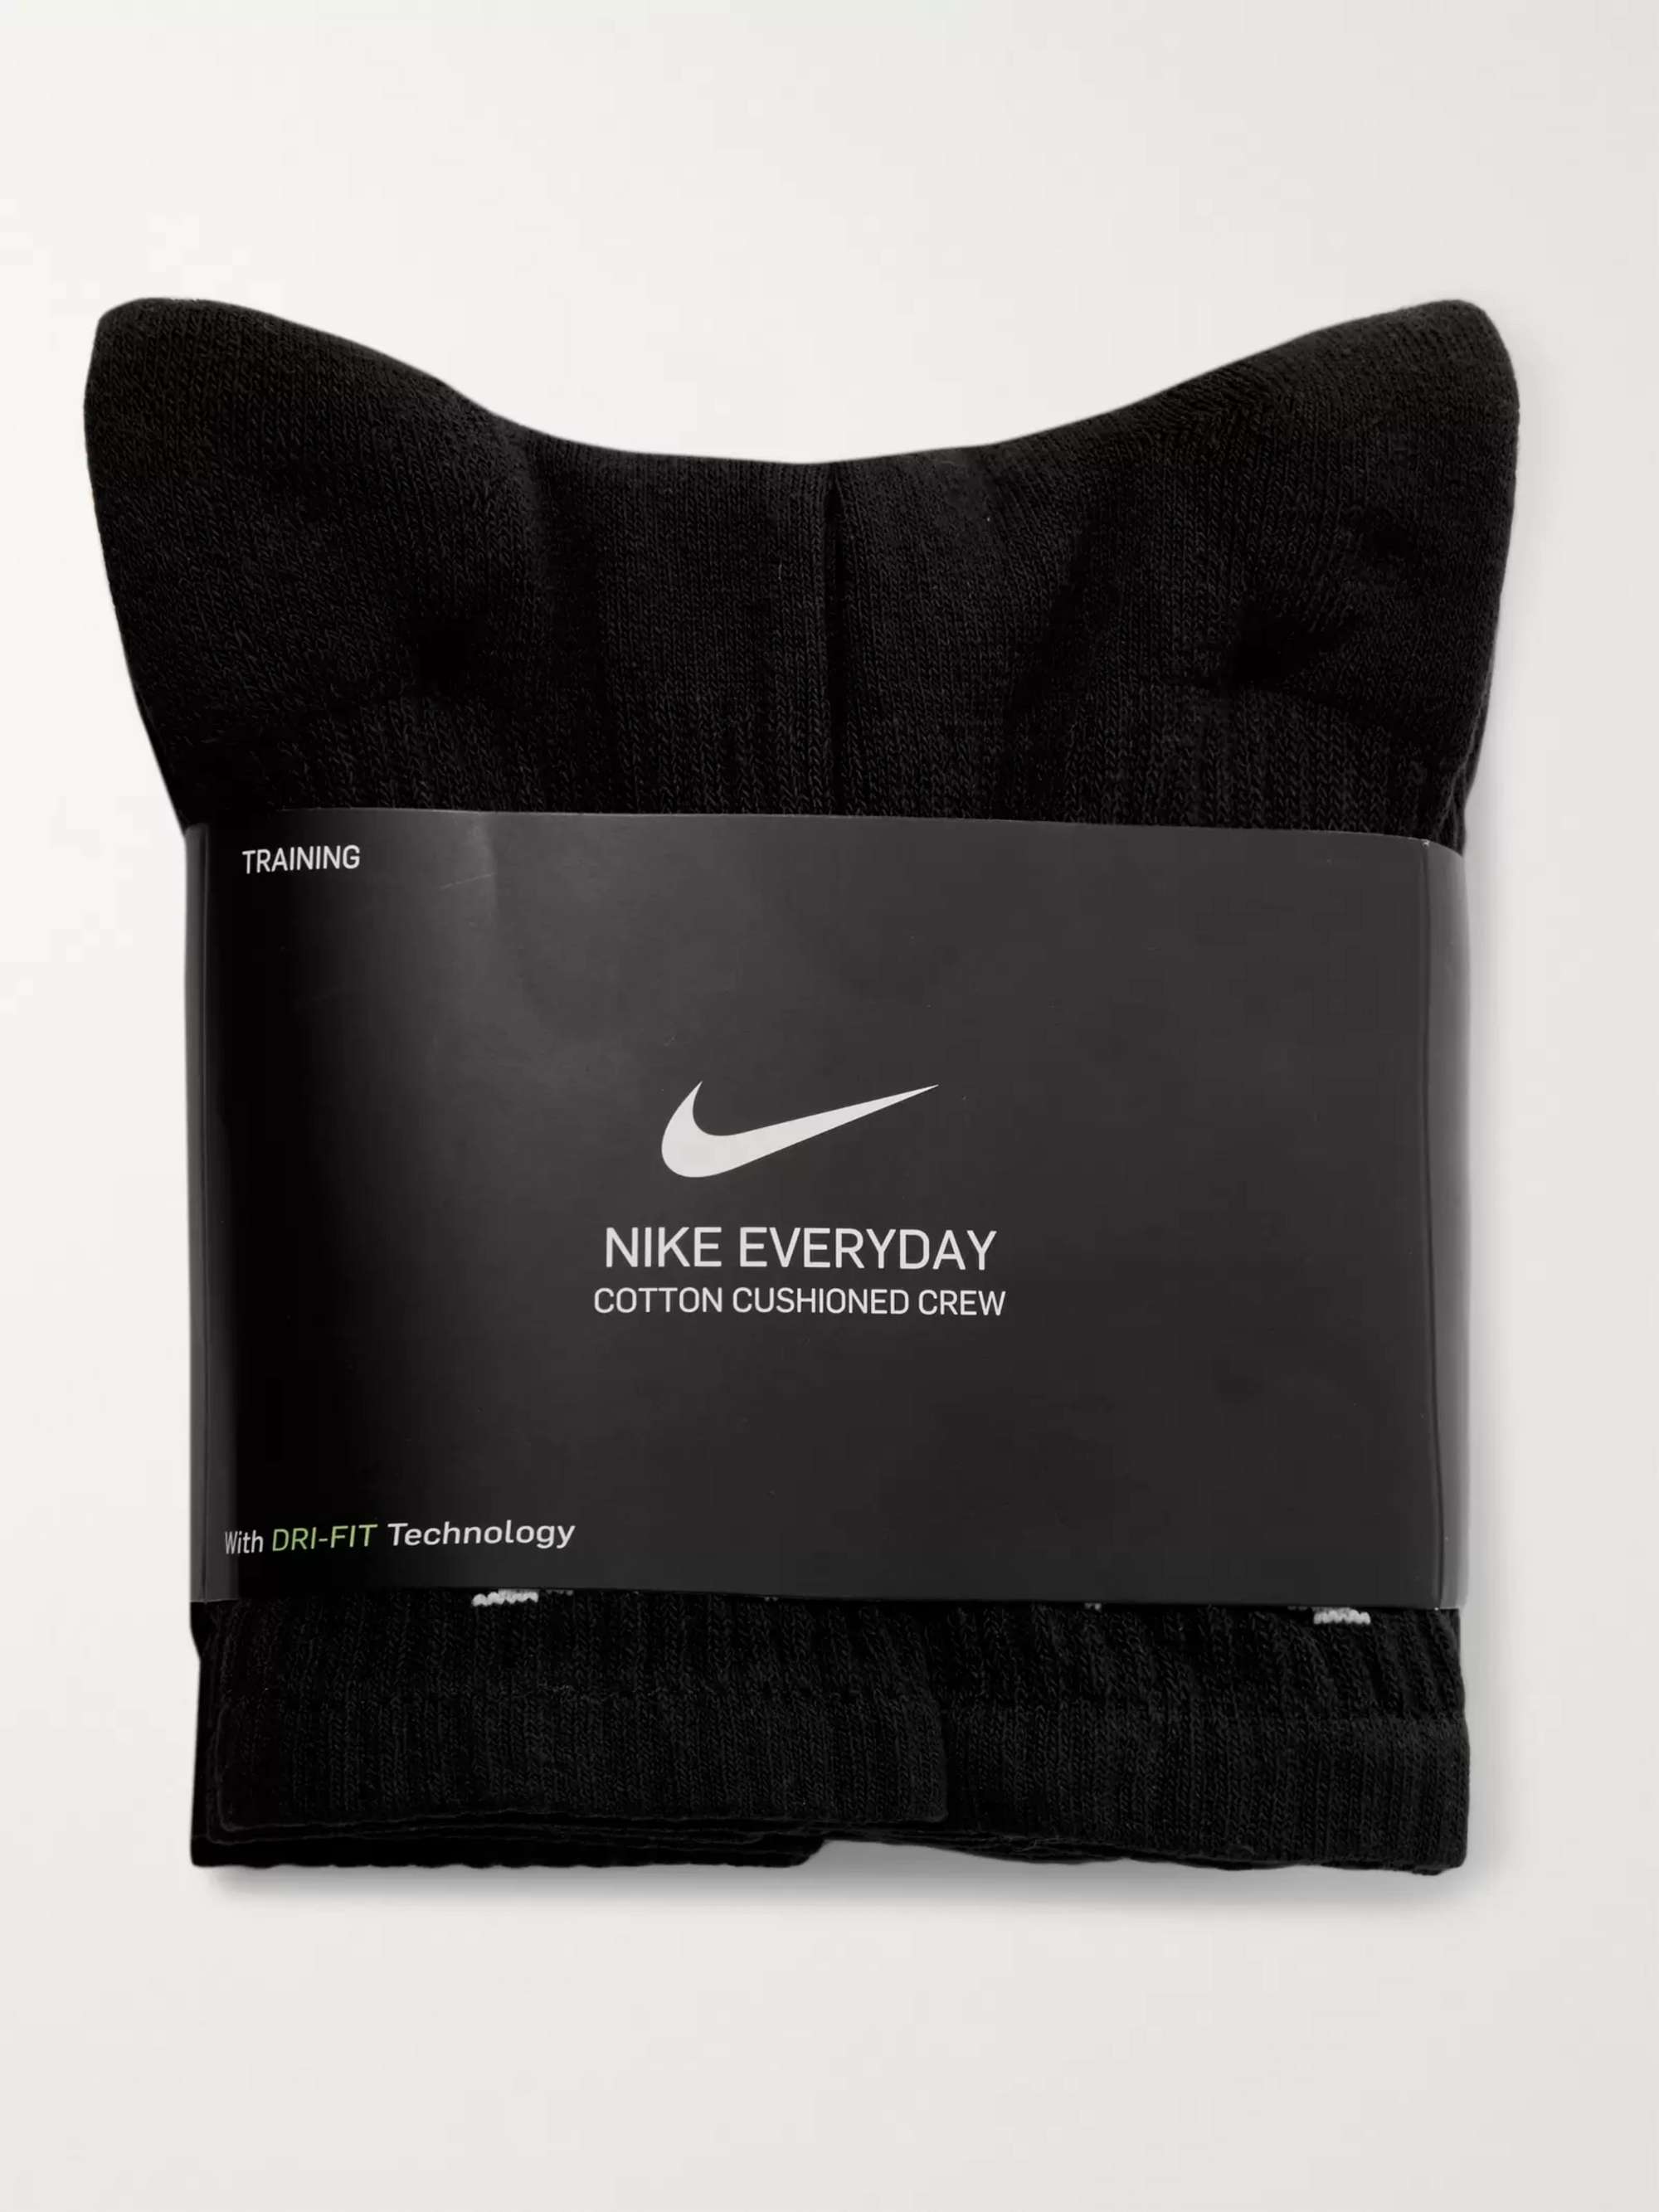 Nike Dri-FIT Crew Training Socks WHITE (Large/6 Pair) 8-12